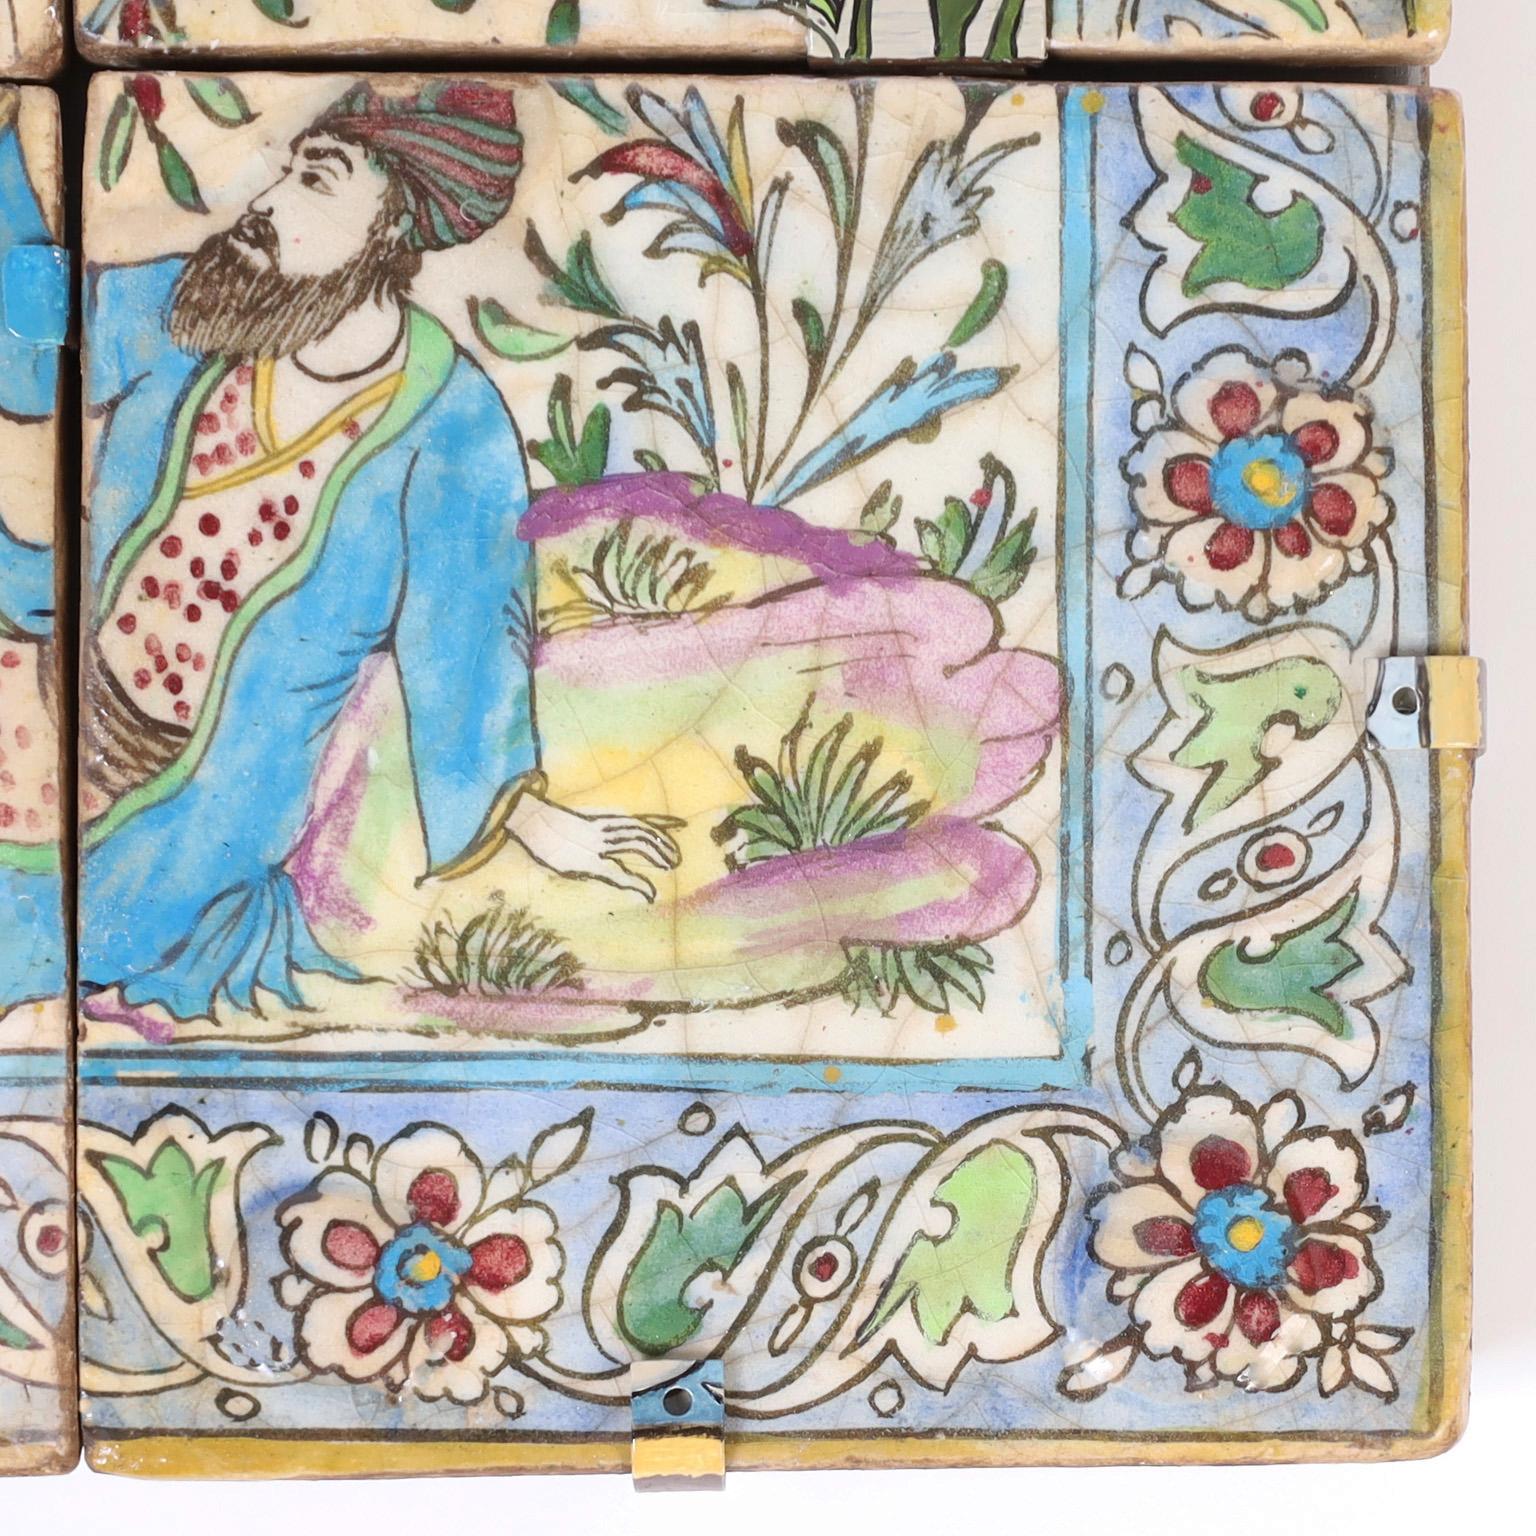 19th Century Persian Glazed Earthenware Tile Panel